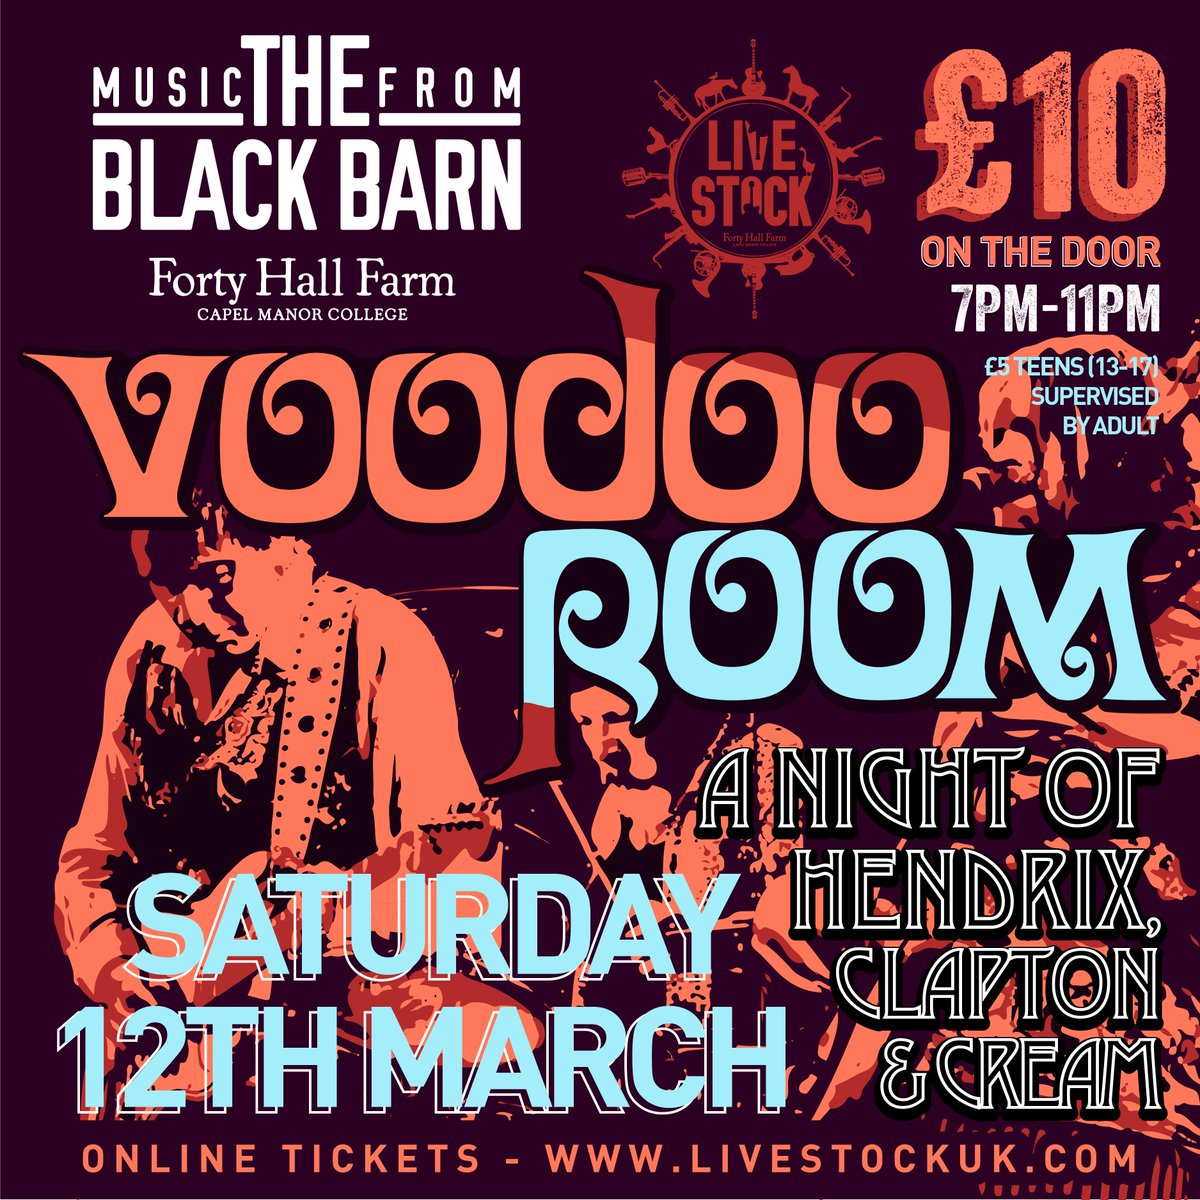 Coming up in March... Voodoo Room, A night of Hendrix, Clapton and Cream buytickets.at/livestockmusic… #LivestockMusic #MusicFromTheBlackBarn #JimiHendrix #EricClapton #Cream #livemusic